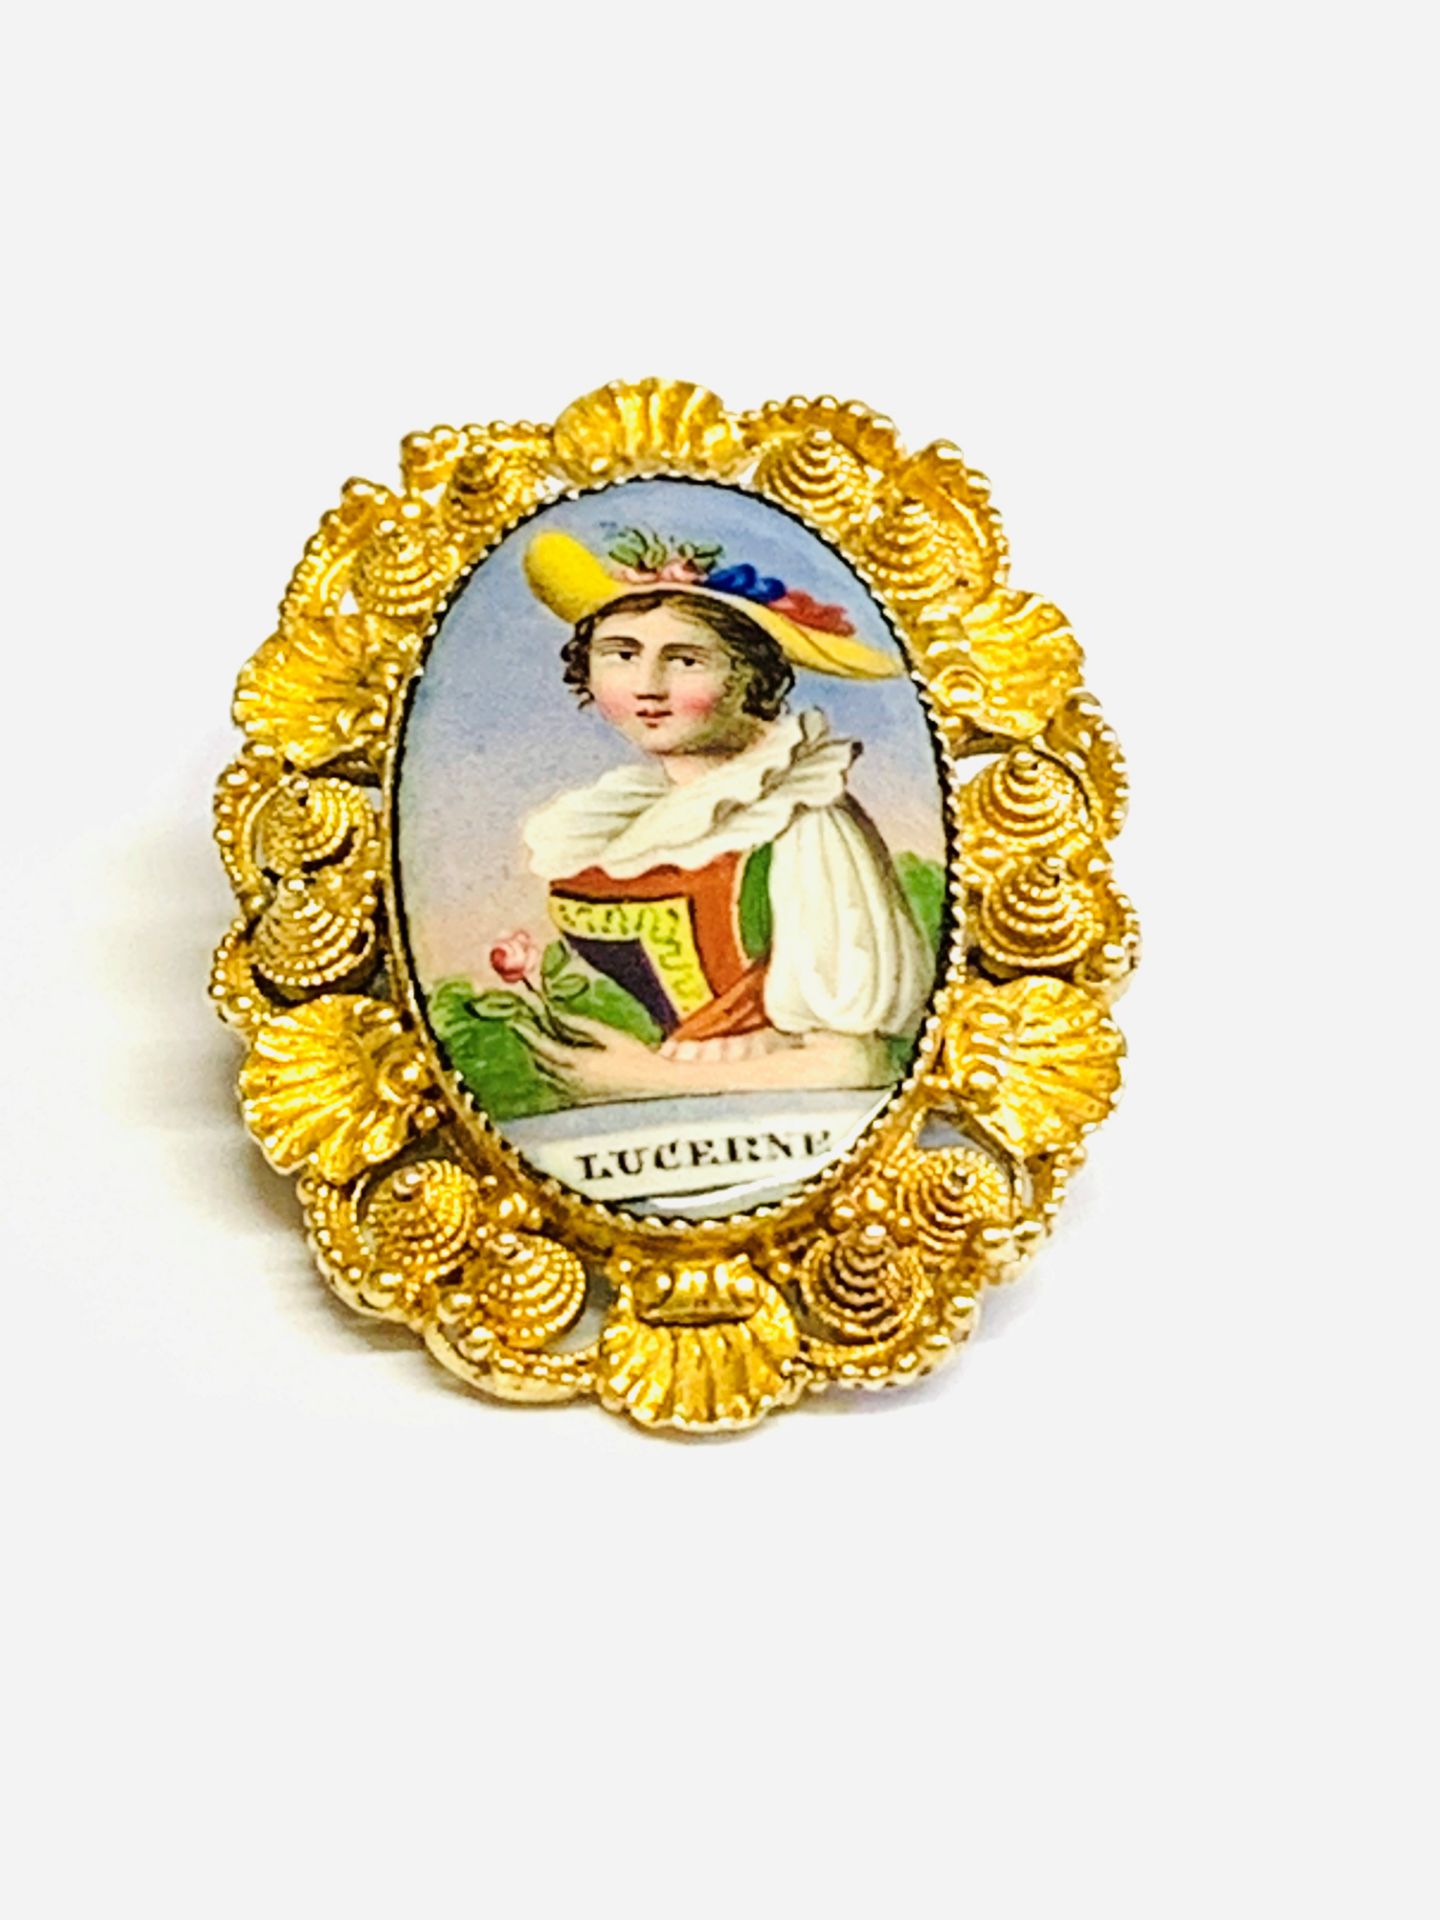 Gold brooch with enamel portrait